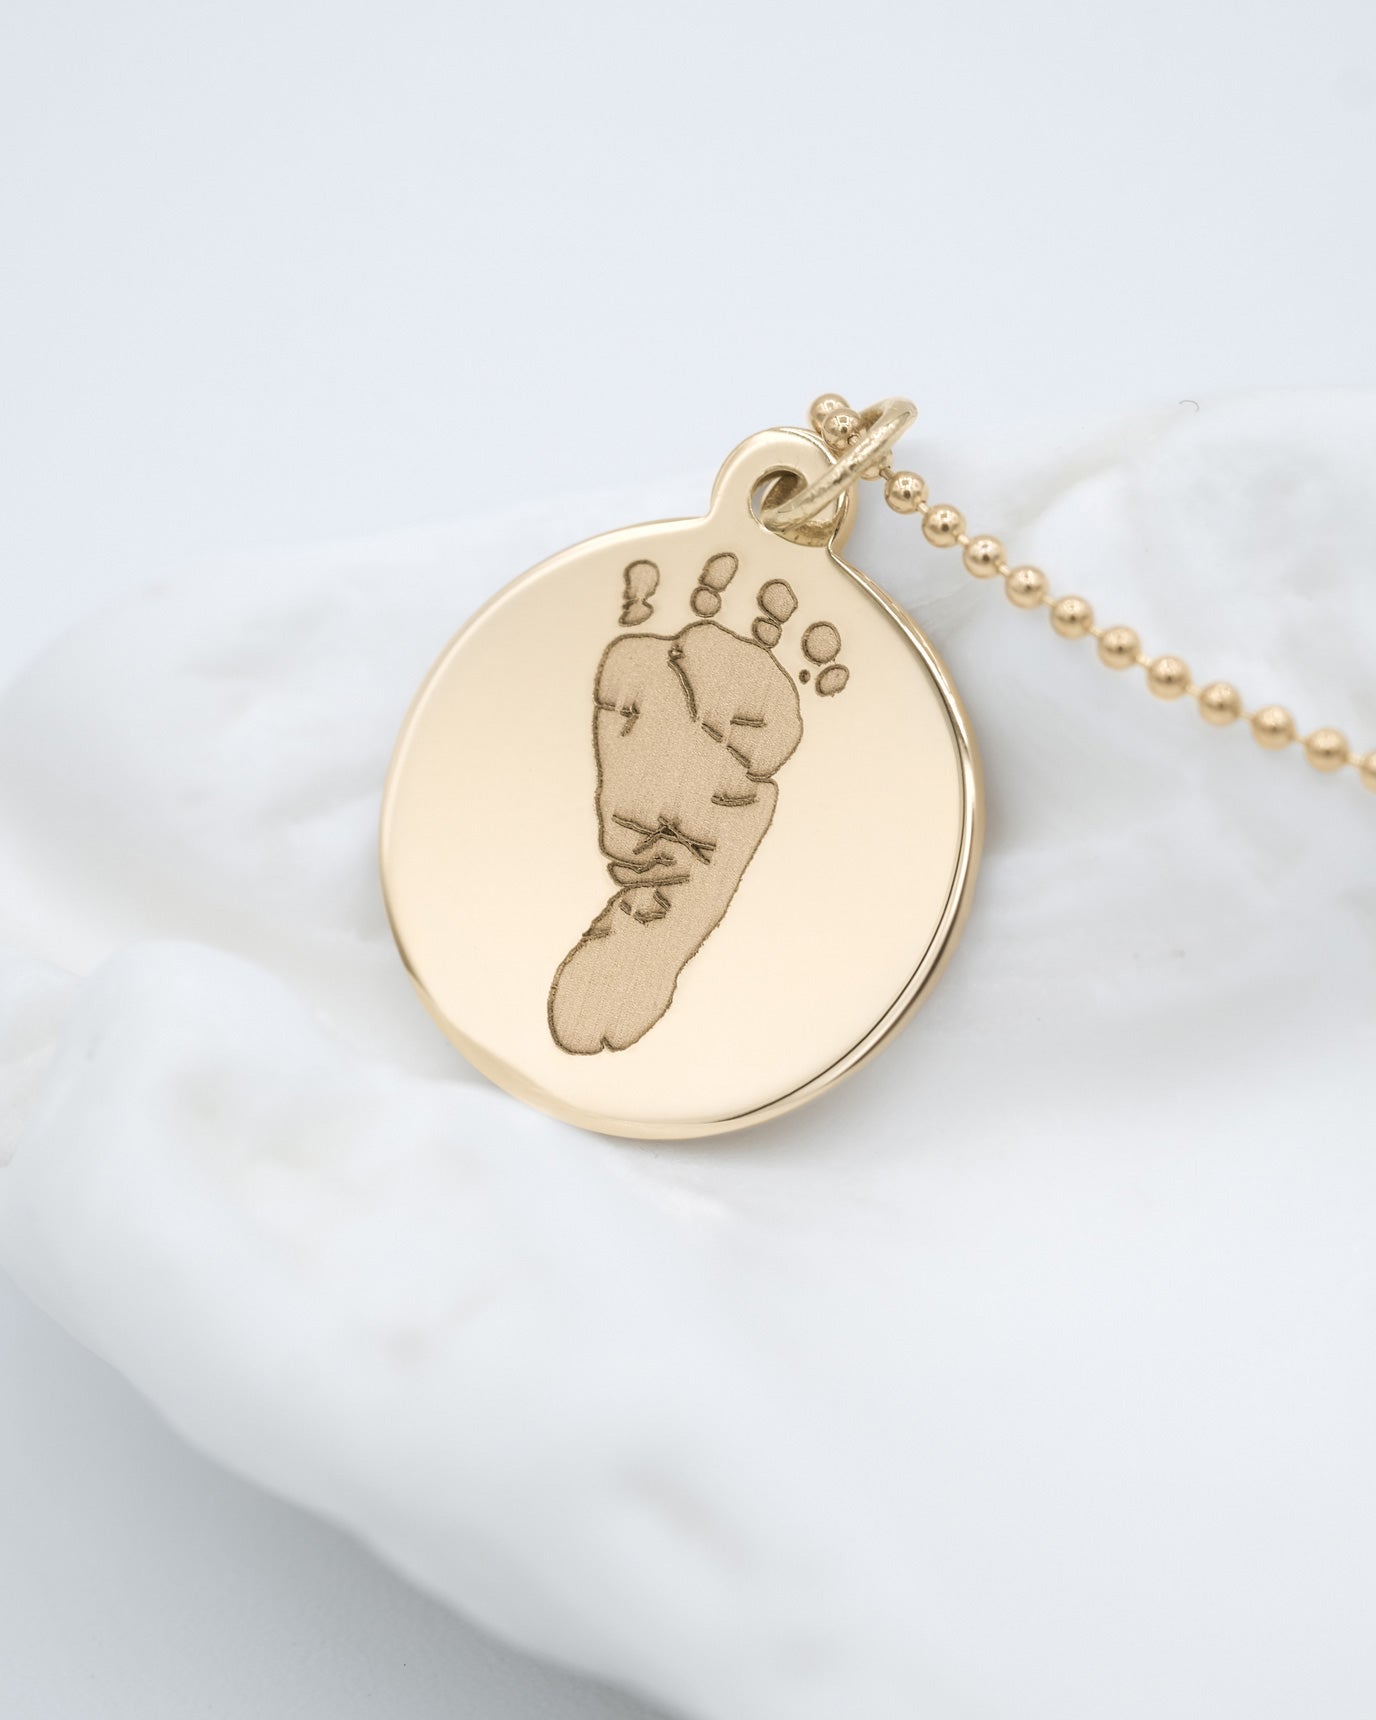 Handprint / Footprint Ball Chain Necklace in 14K Gold